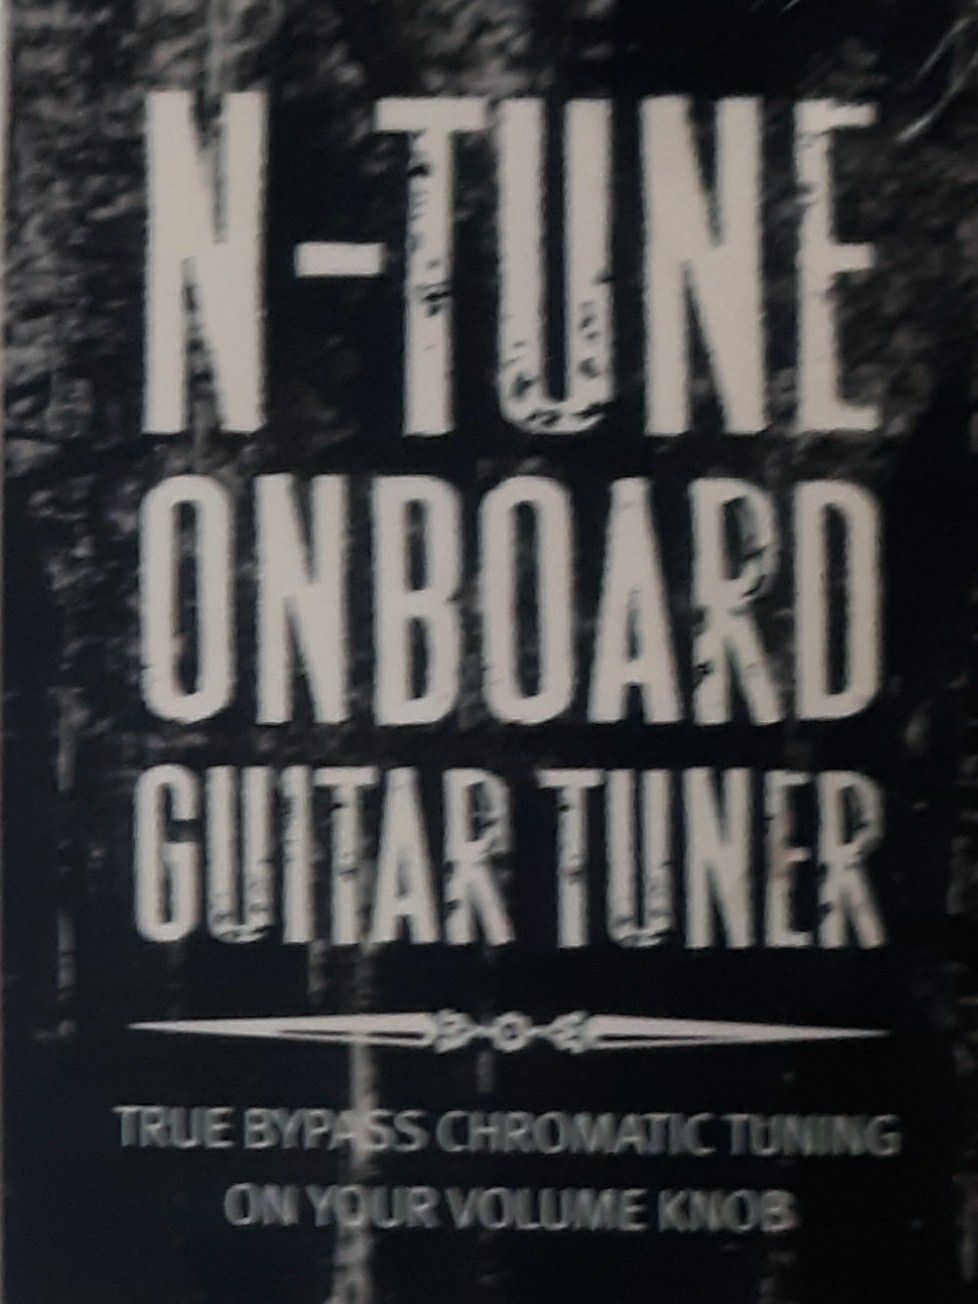 N-TUNE GUITAR TUNER